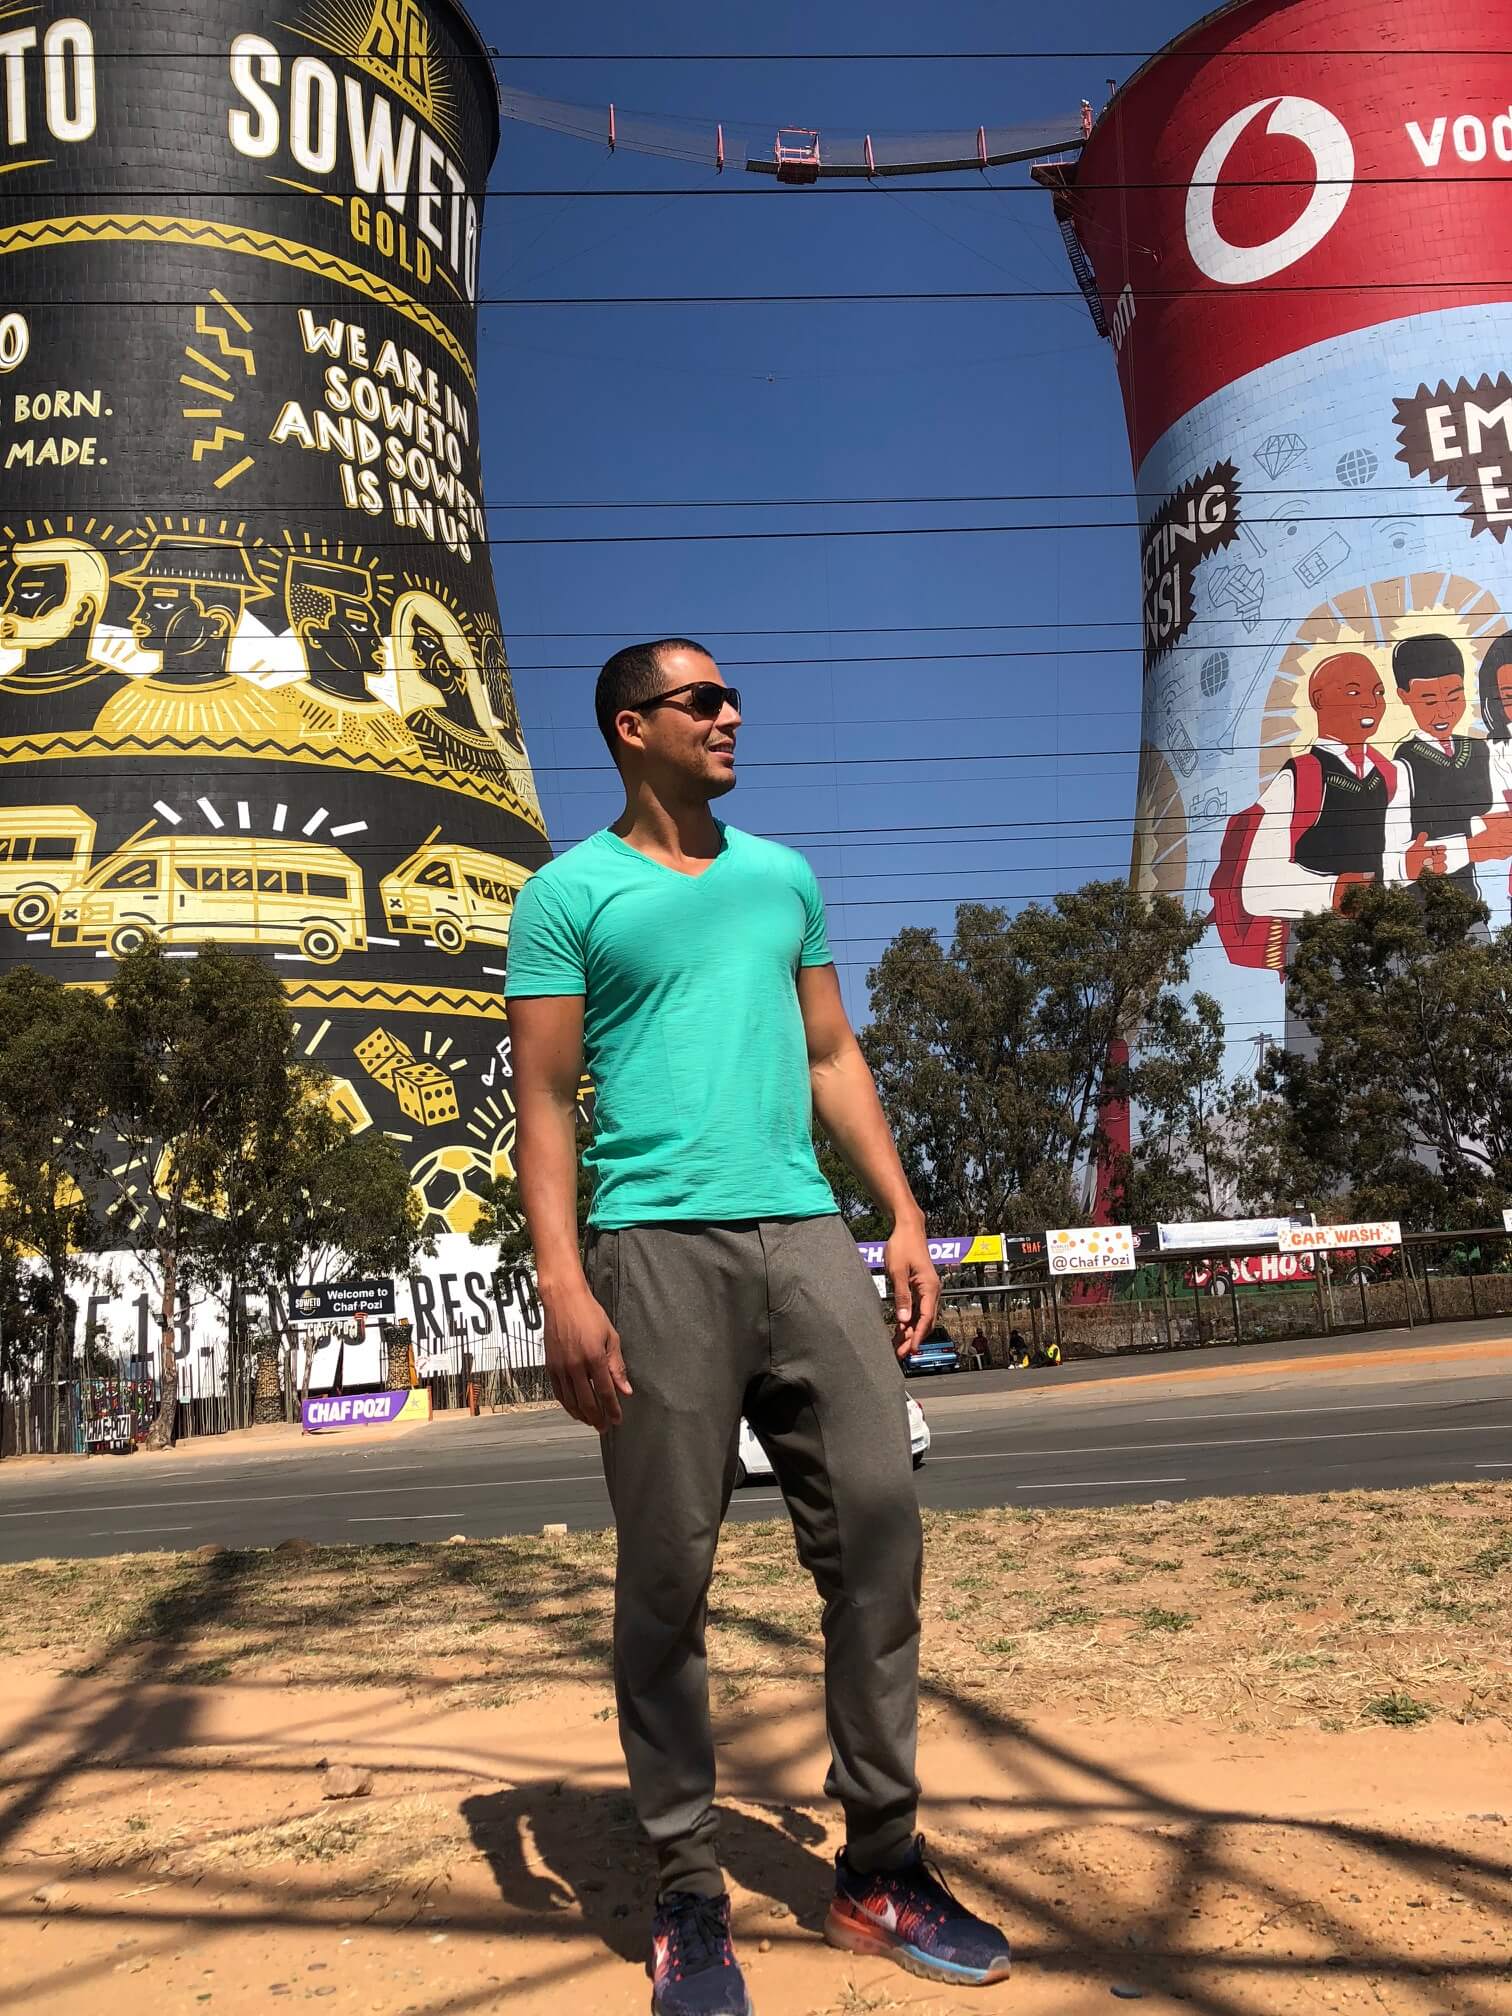 Soweto, Joanesburgo